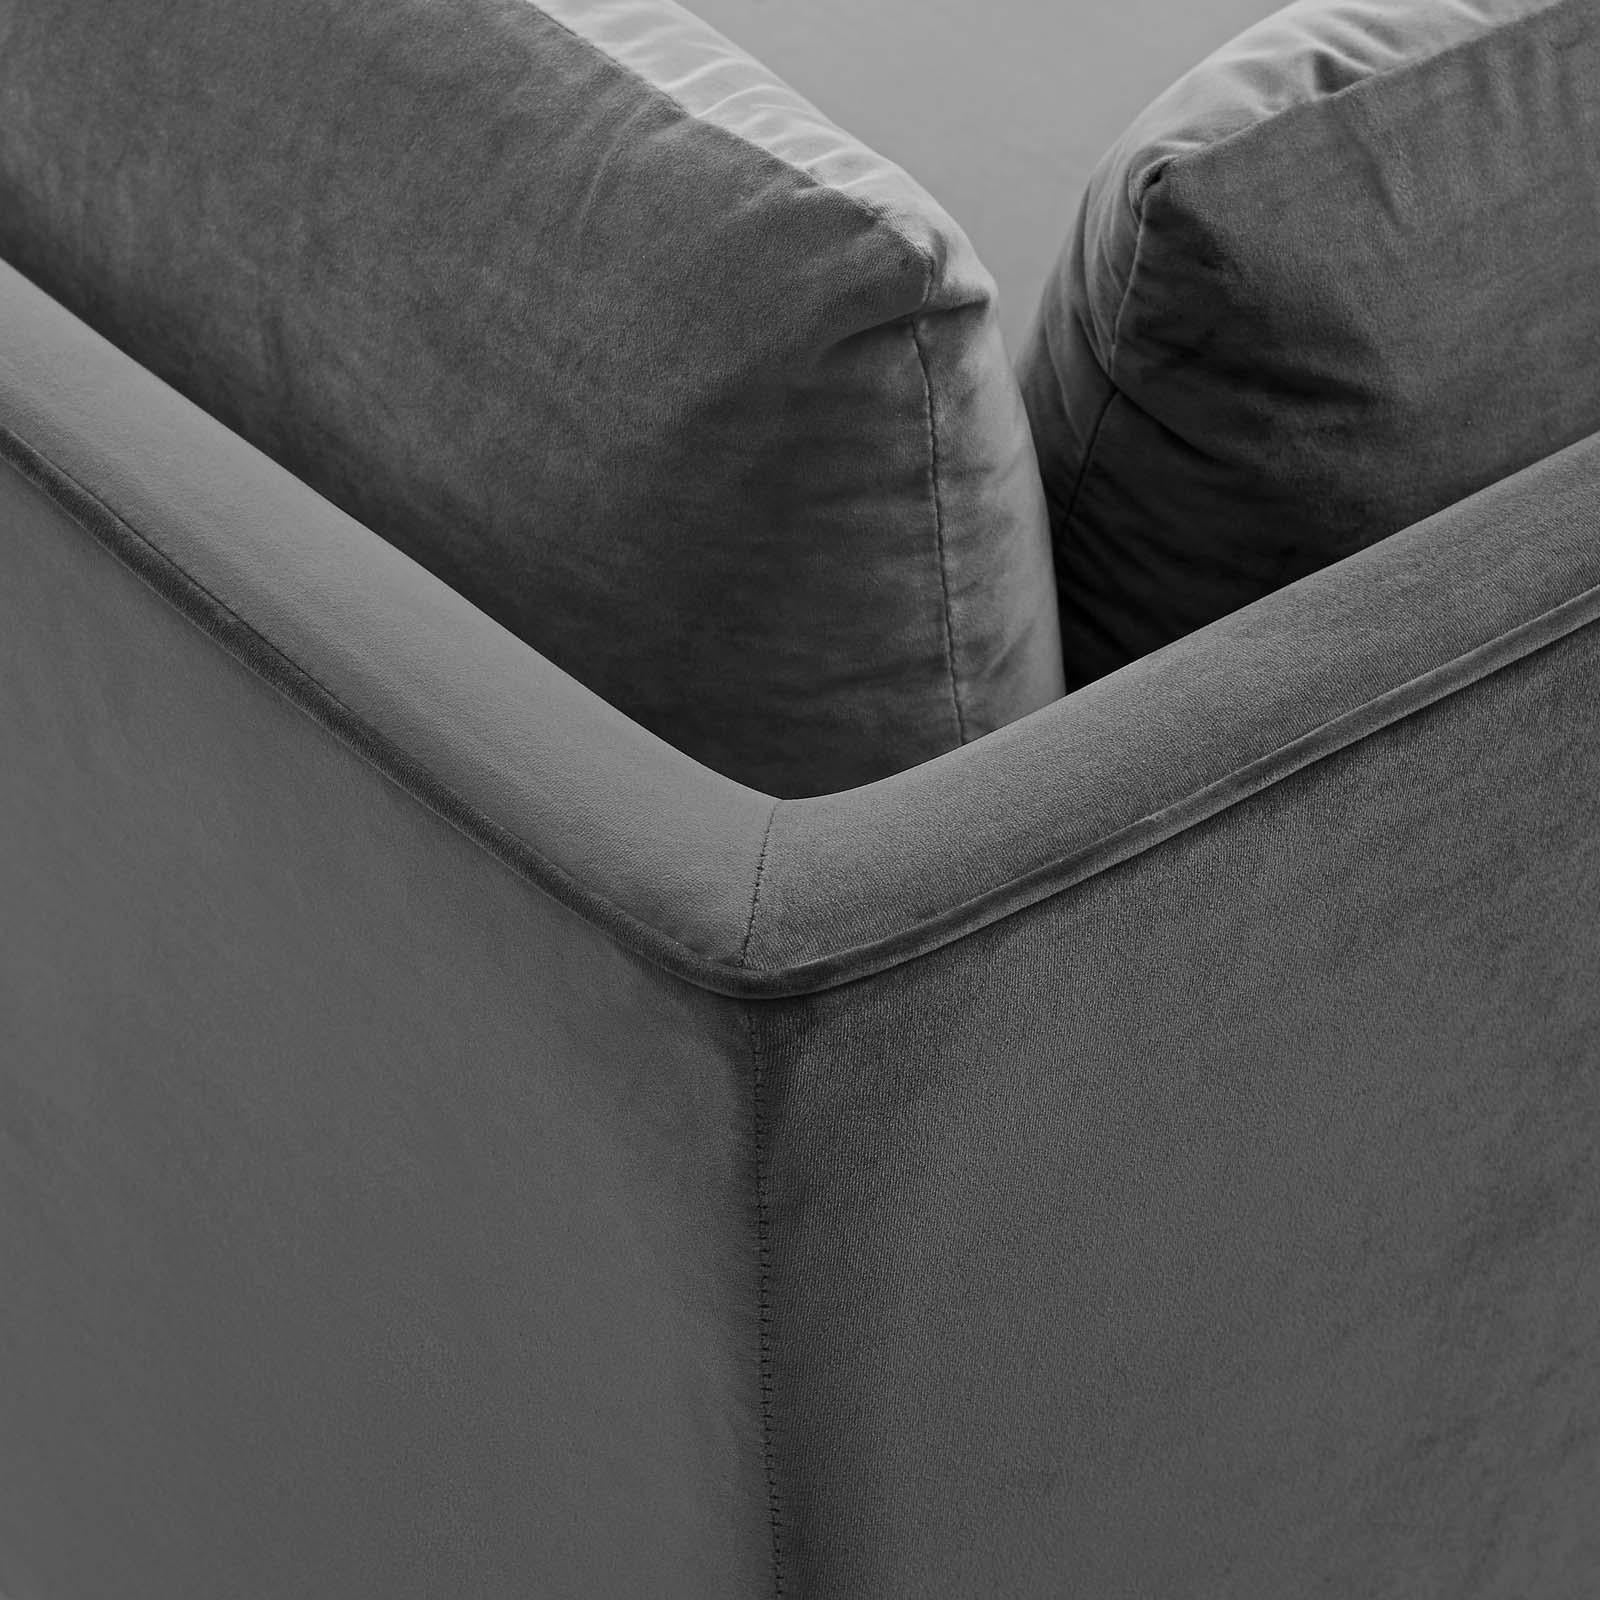 Modway Furniture Modern Ardent Performance Velvet Sectional Sofa Corner Chair - EEI-3985